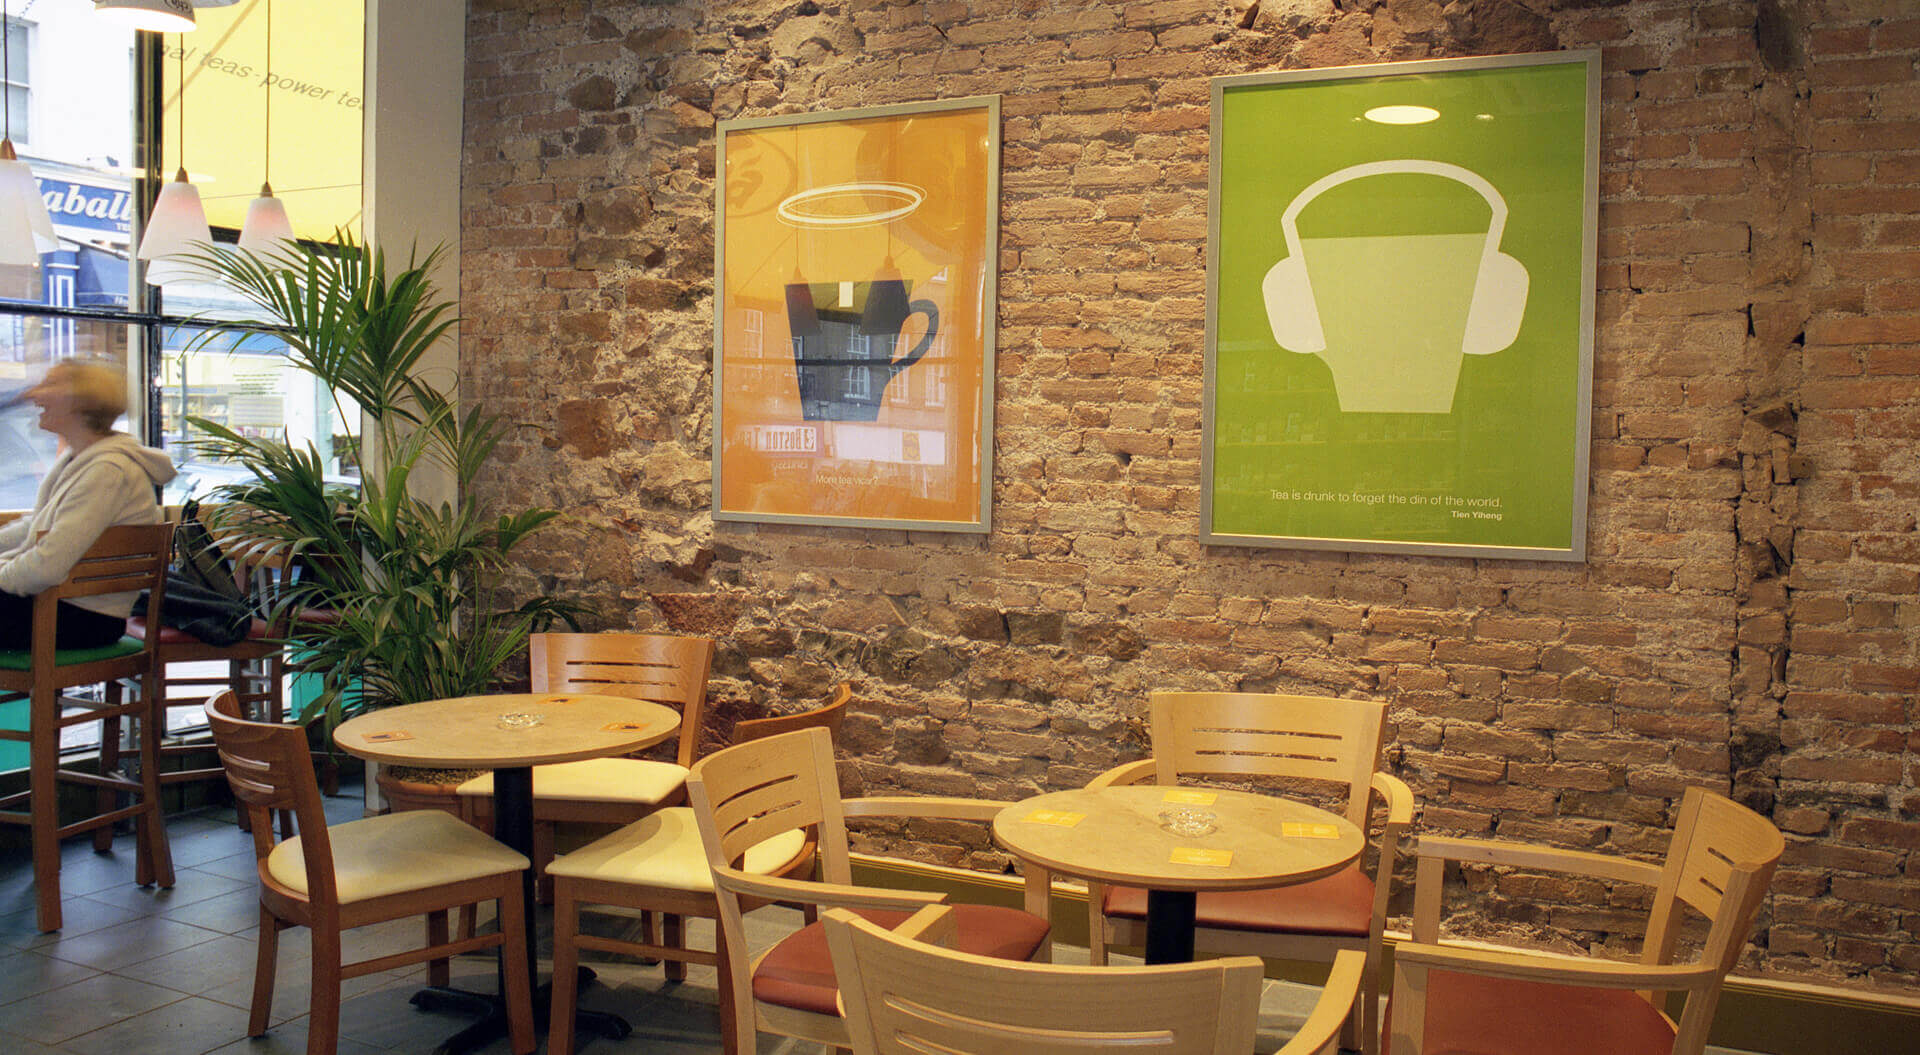 Cha Teahouse café  interior design seating area and branding